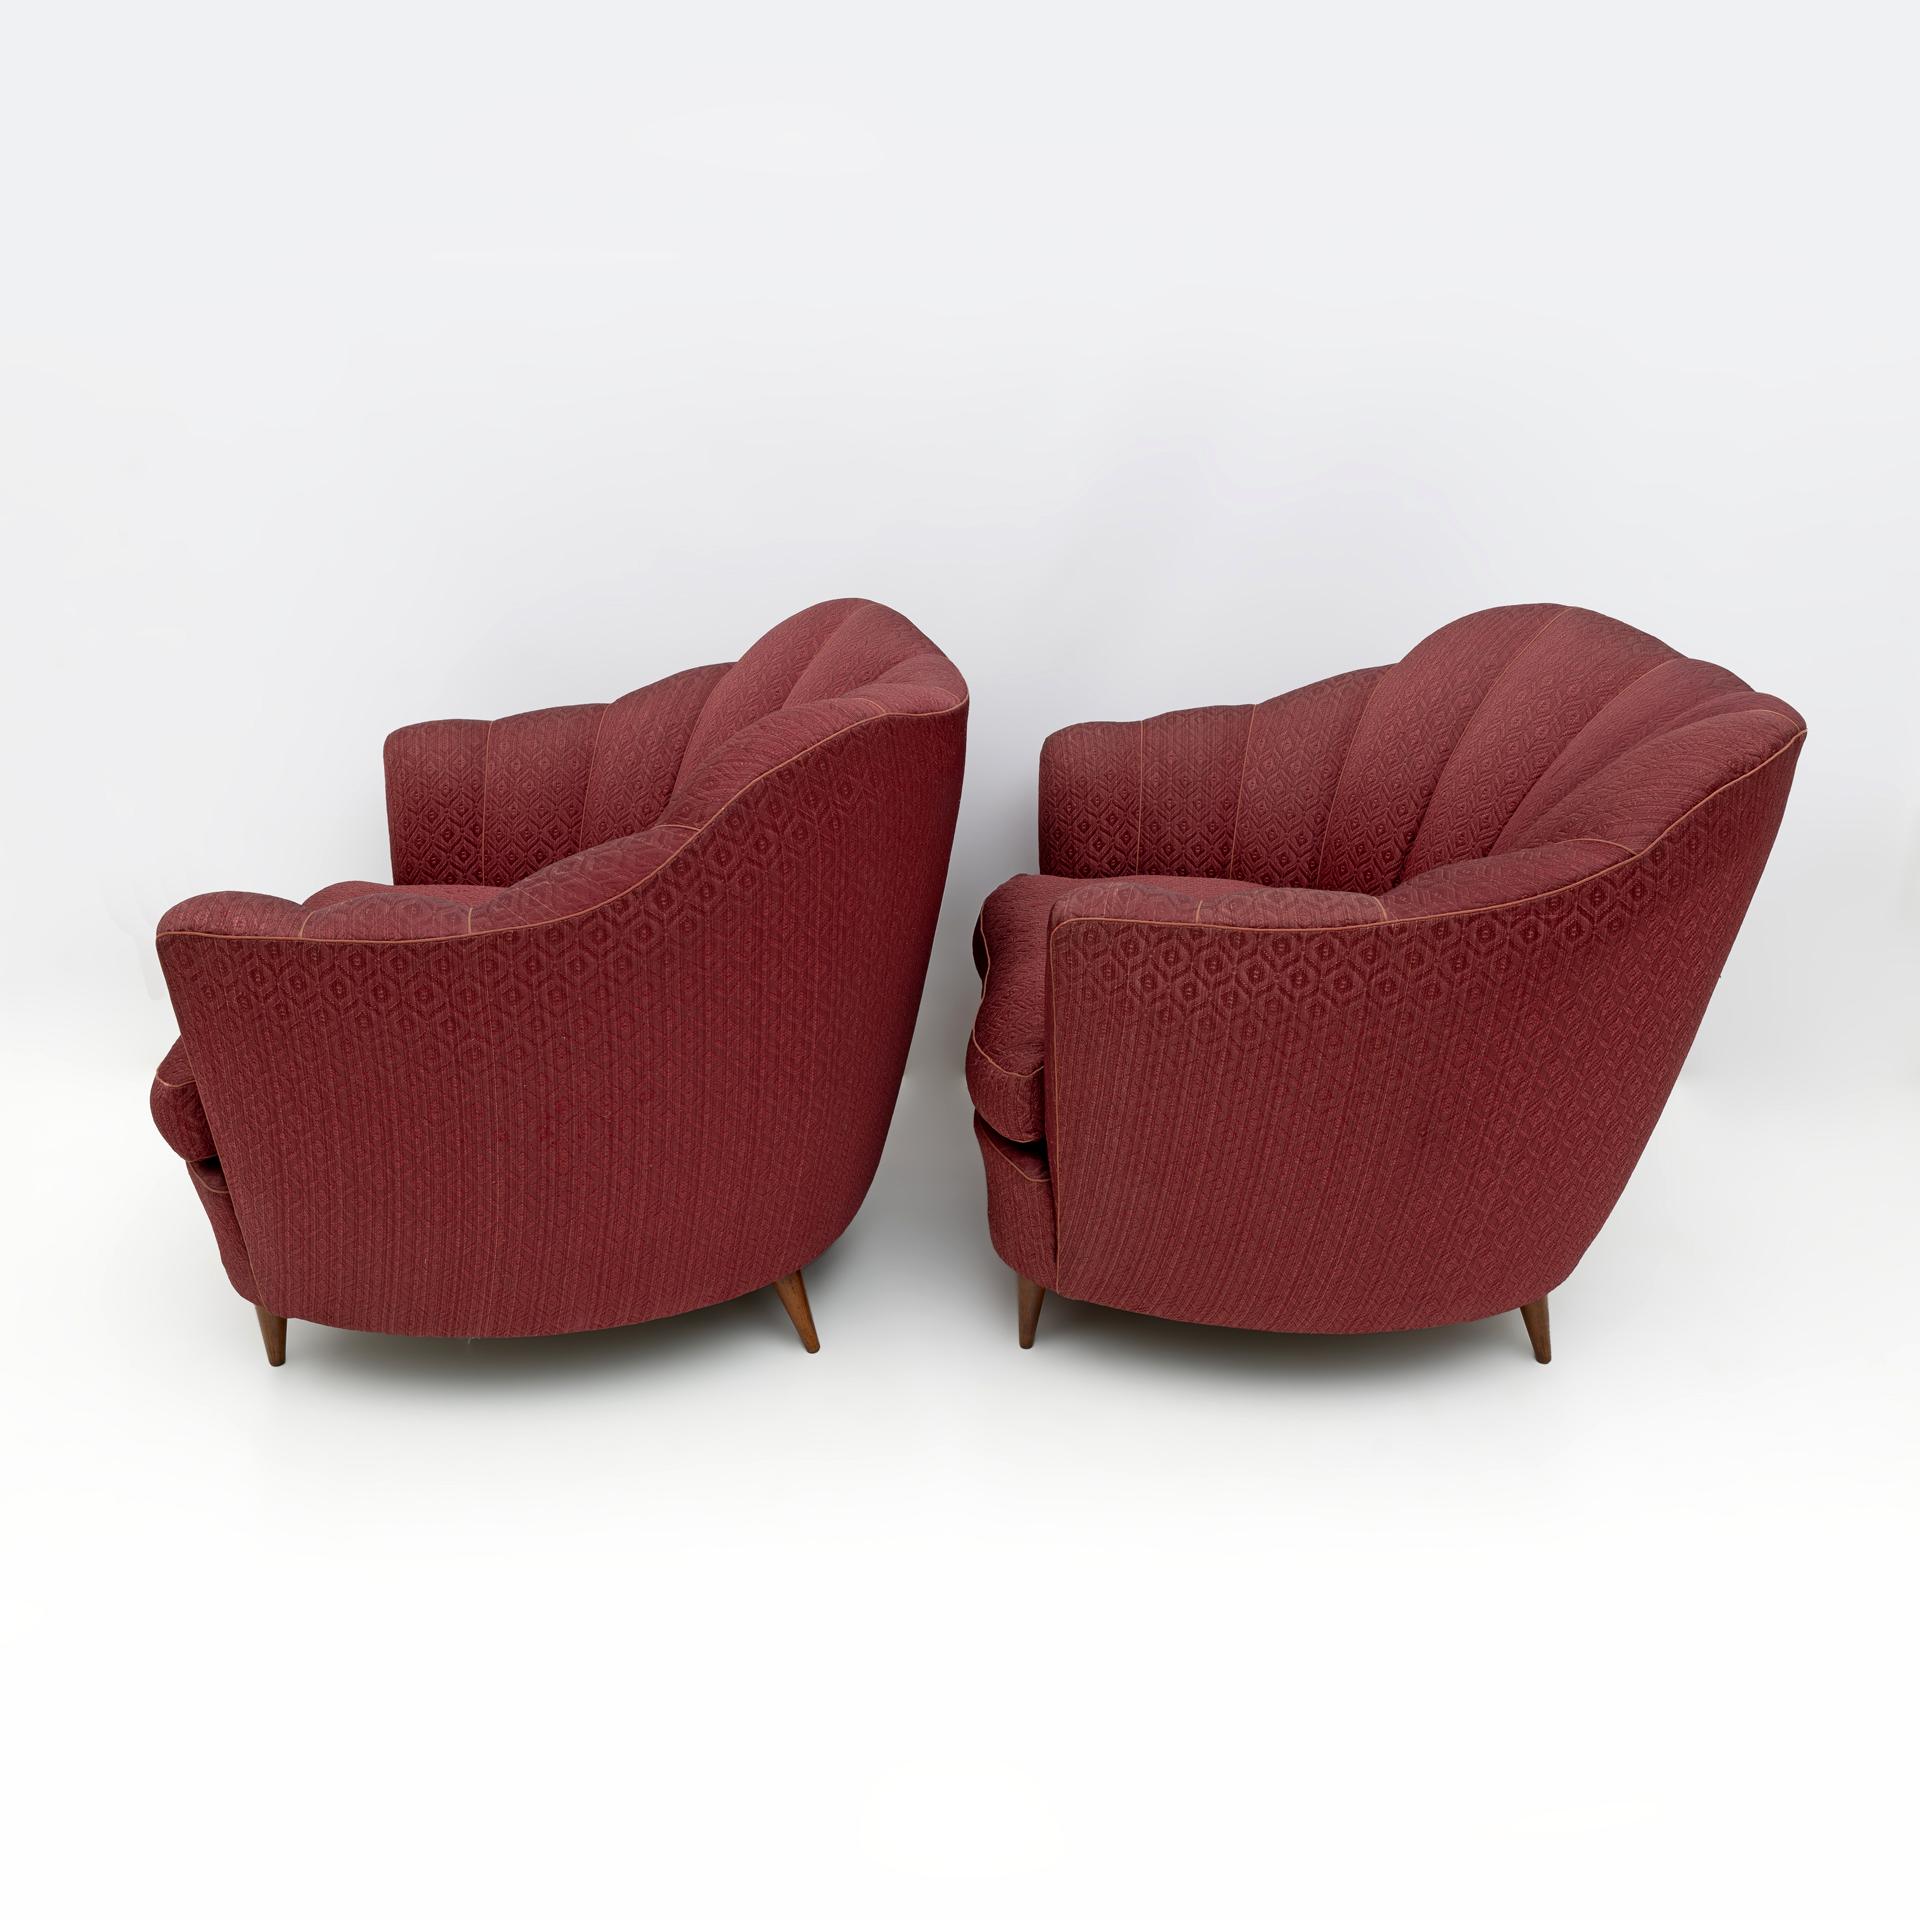 Italian Pair of Gio Ponti Mid-Century Modern Velvet Armchairs for Casa e Giardino, 1950s For Sale